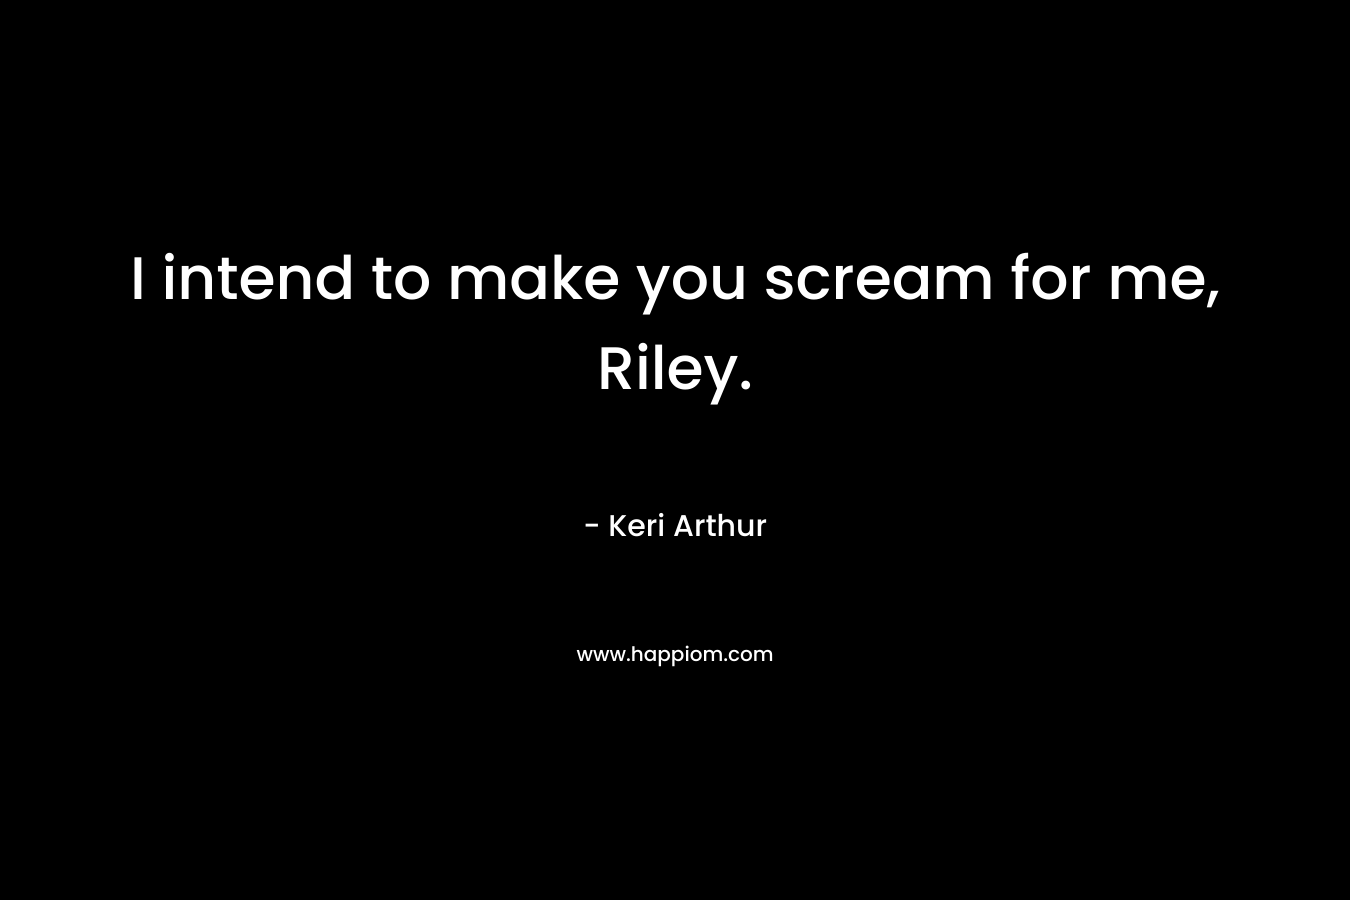 I intend to make you scream for me, Riley.